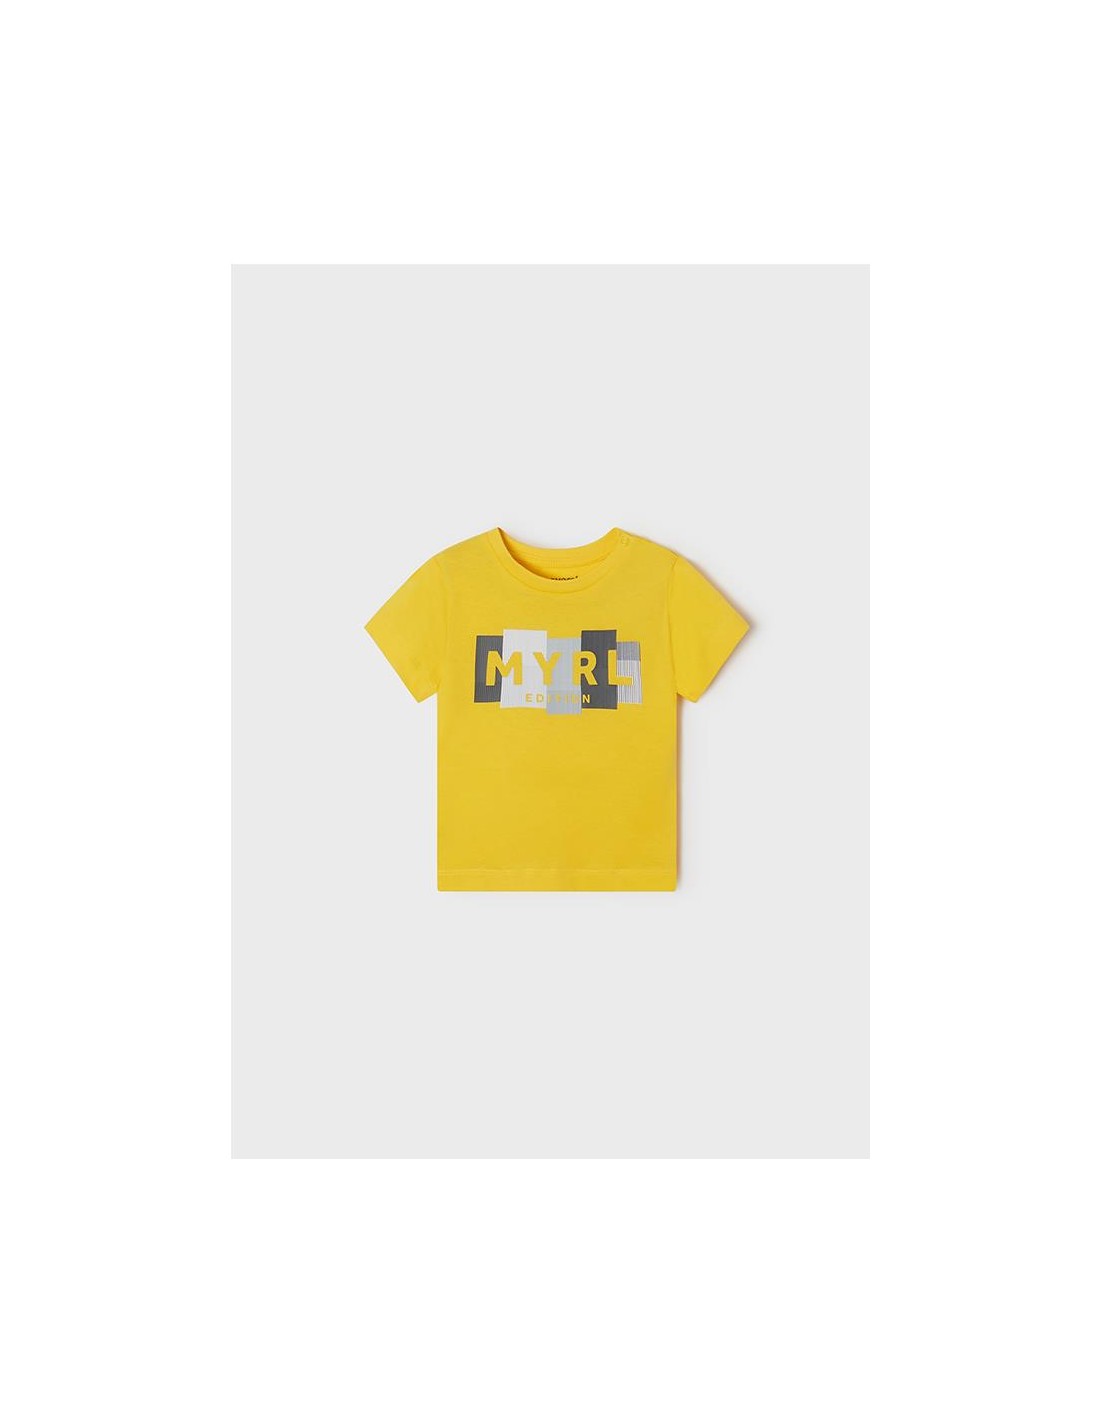 Camiseta básica de manga corta amarilla niño